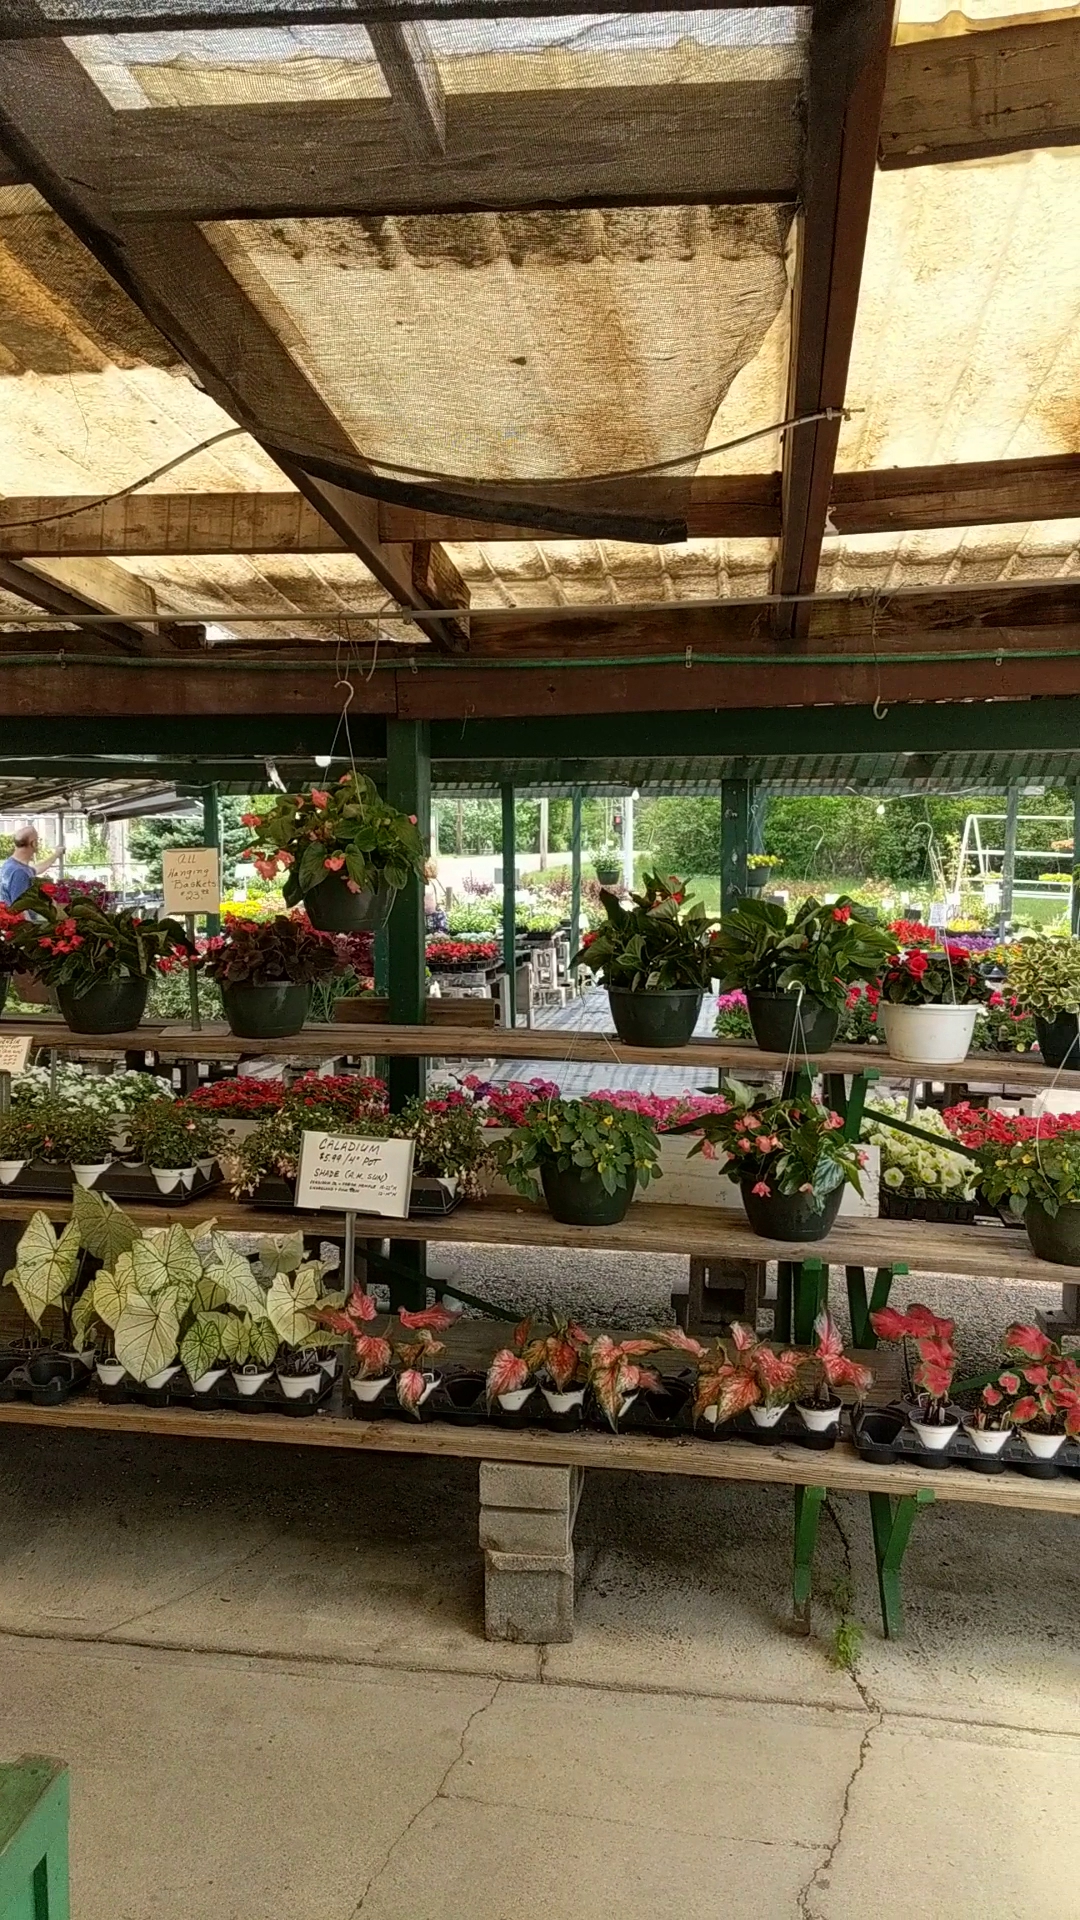 Winton Woods Garden Center and Florist (Shroyer Nursery)